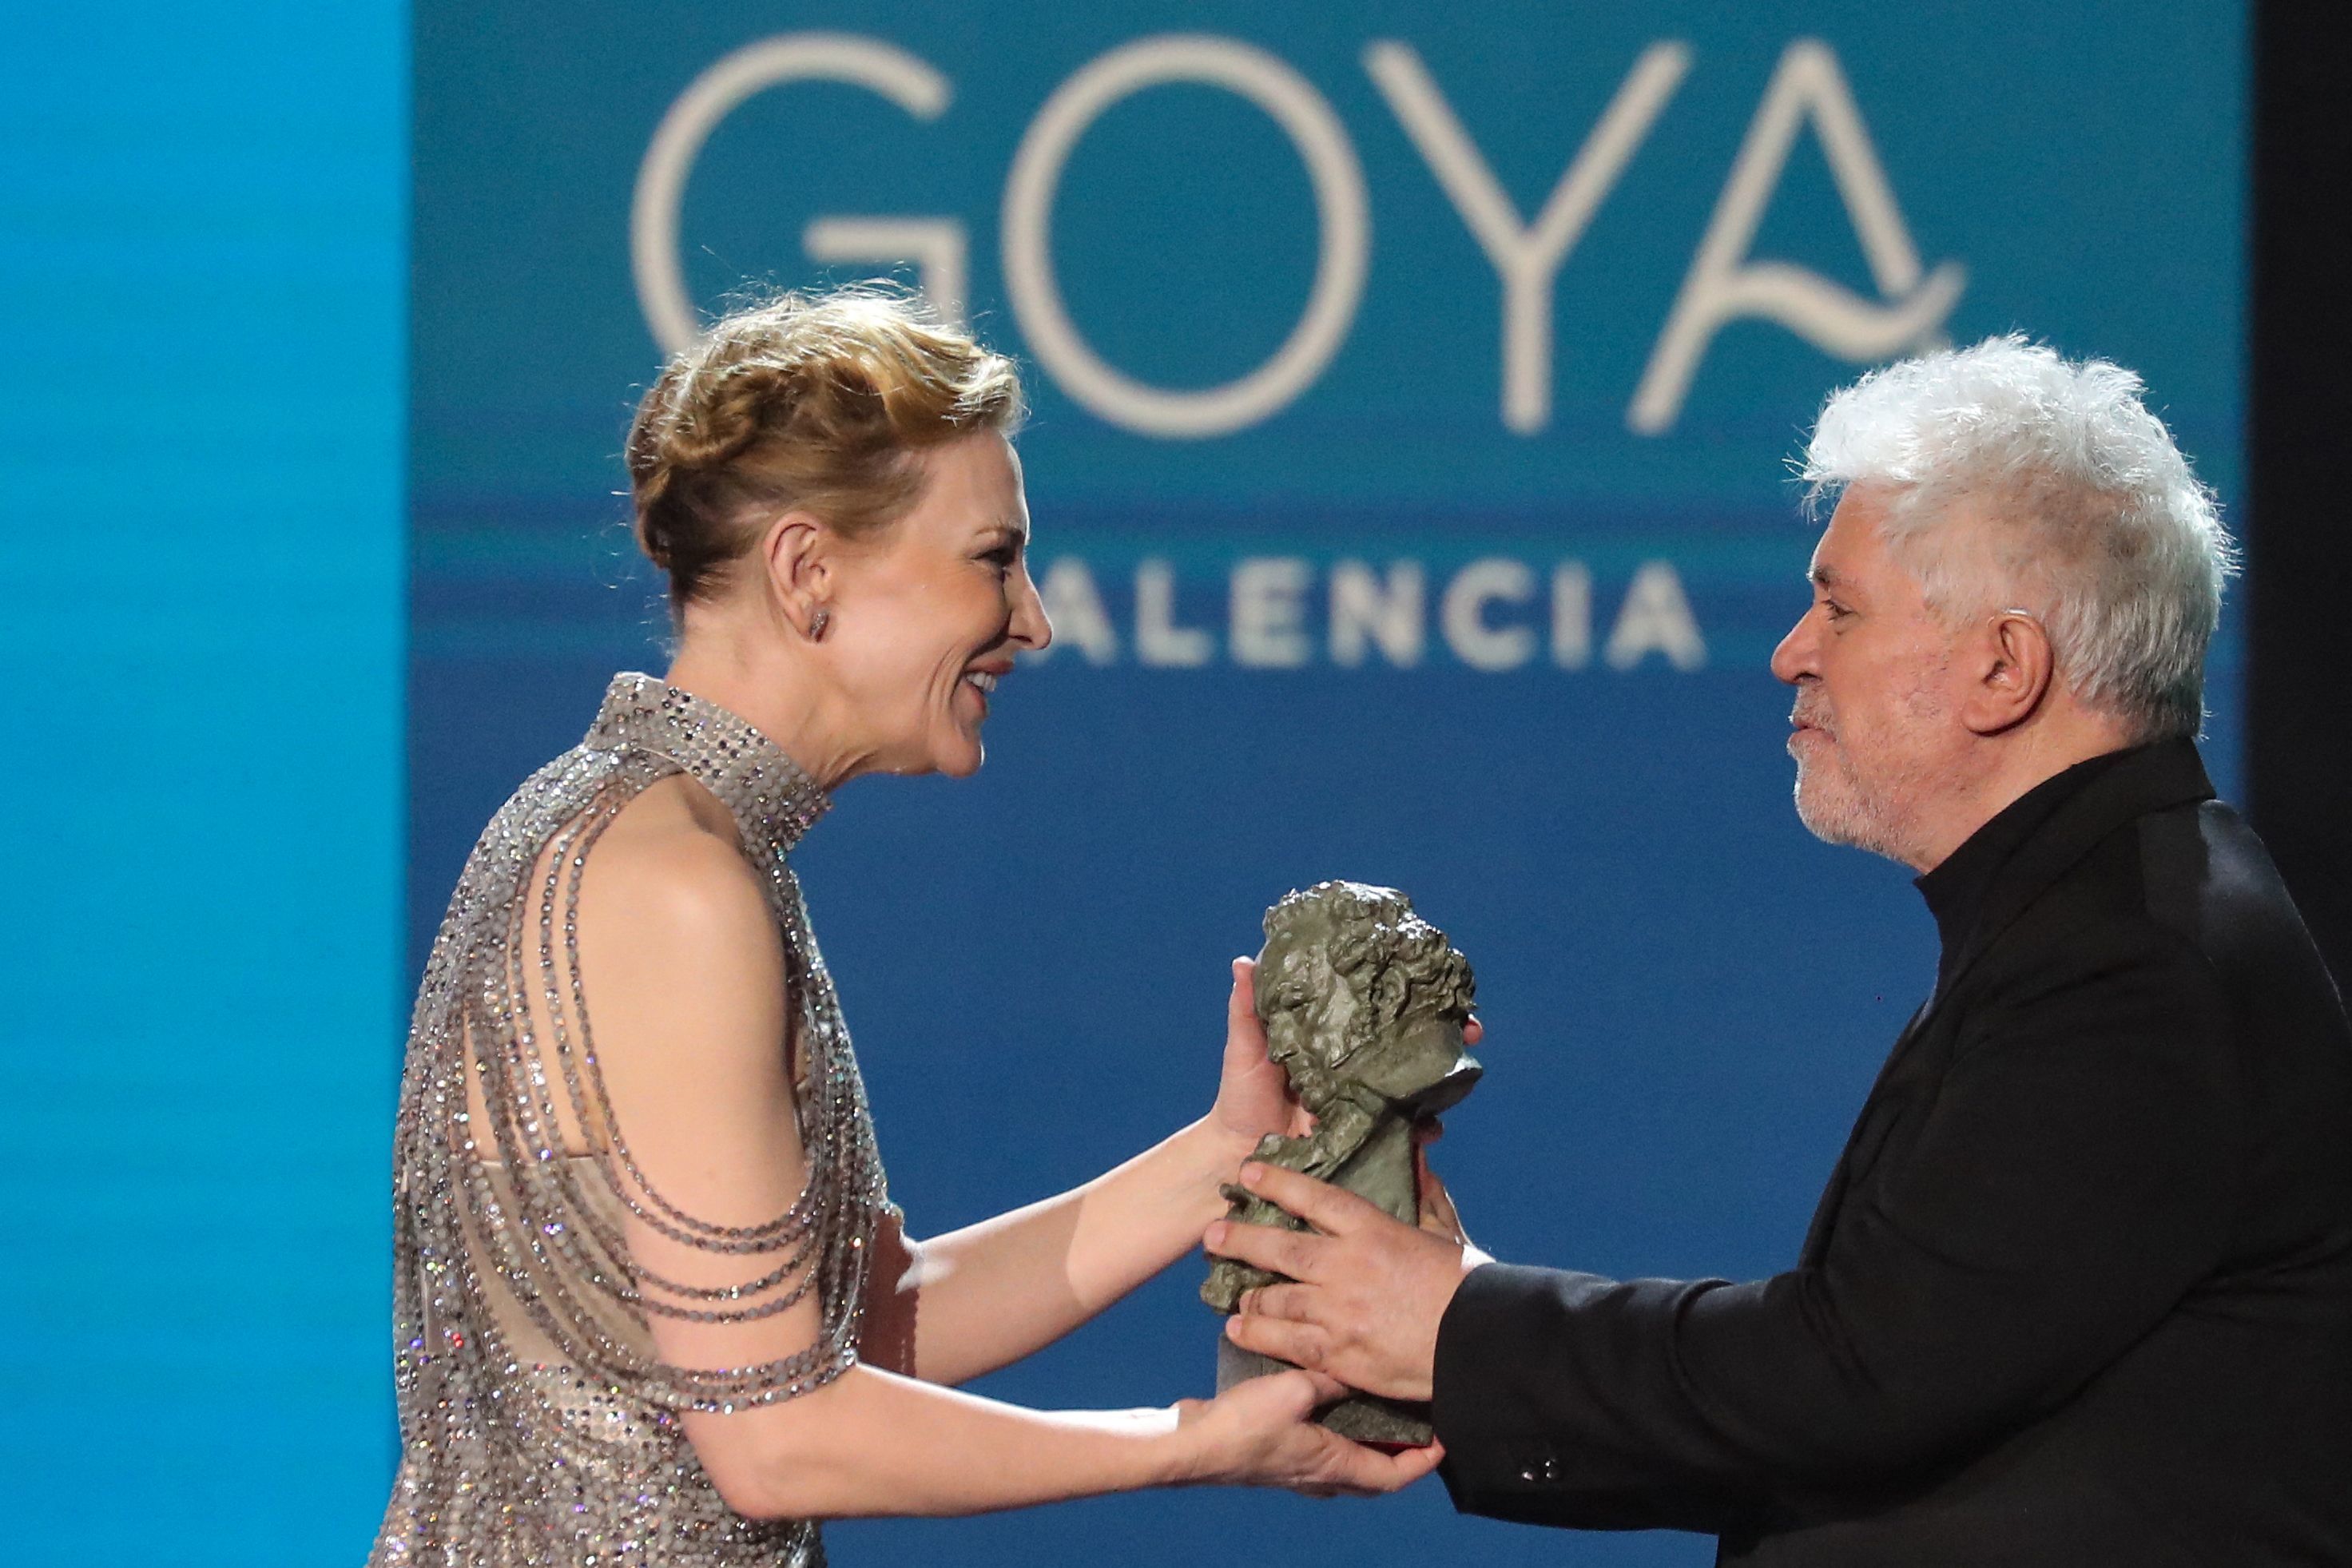 Pedro Almodvar entrega el Goya internacional a Cate Blanchett.